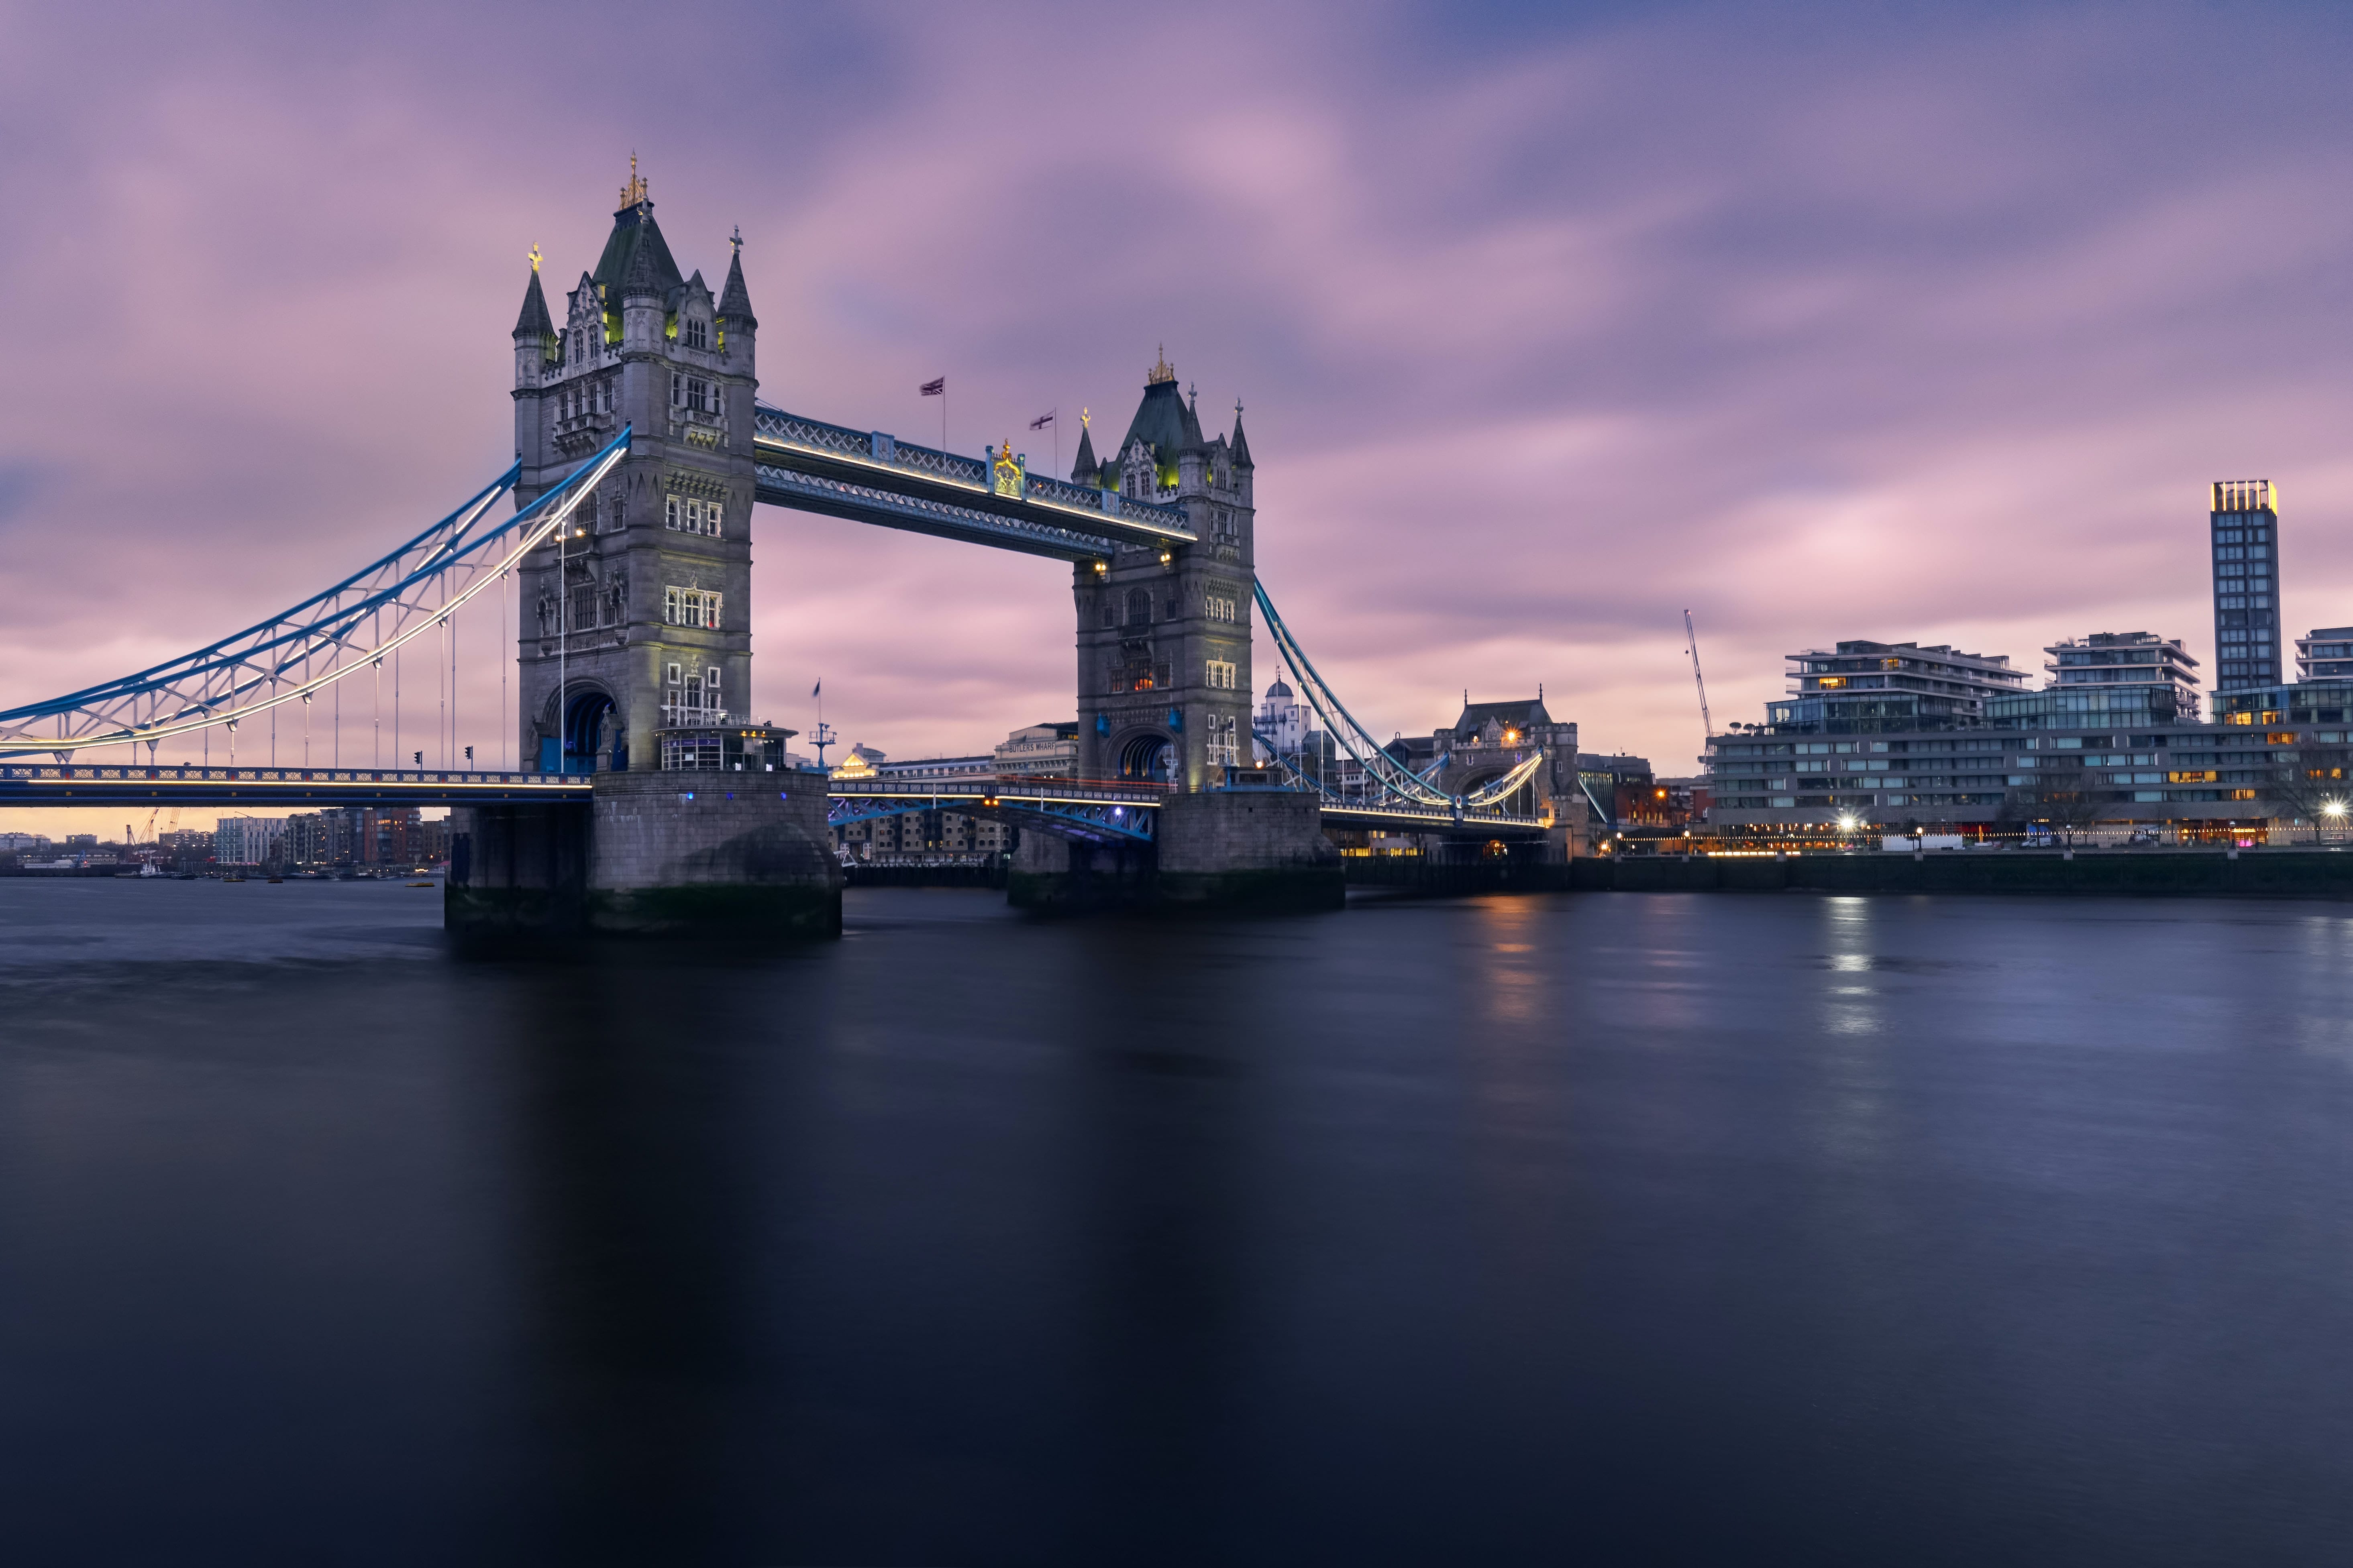 London bridge photo by Veliko Karachiviev